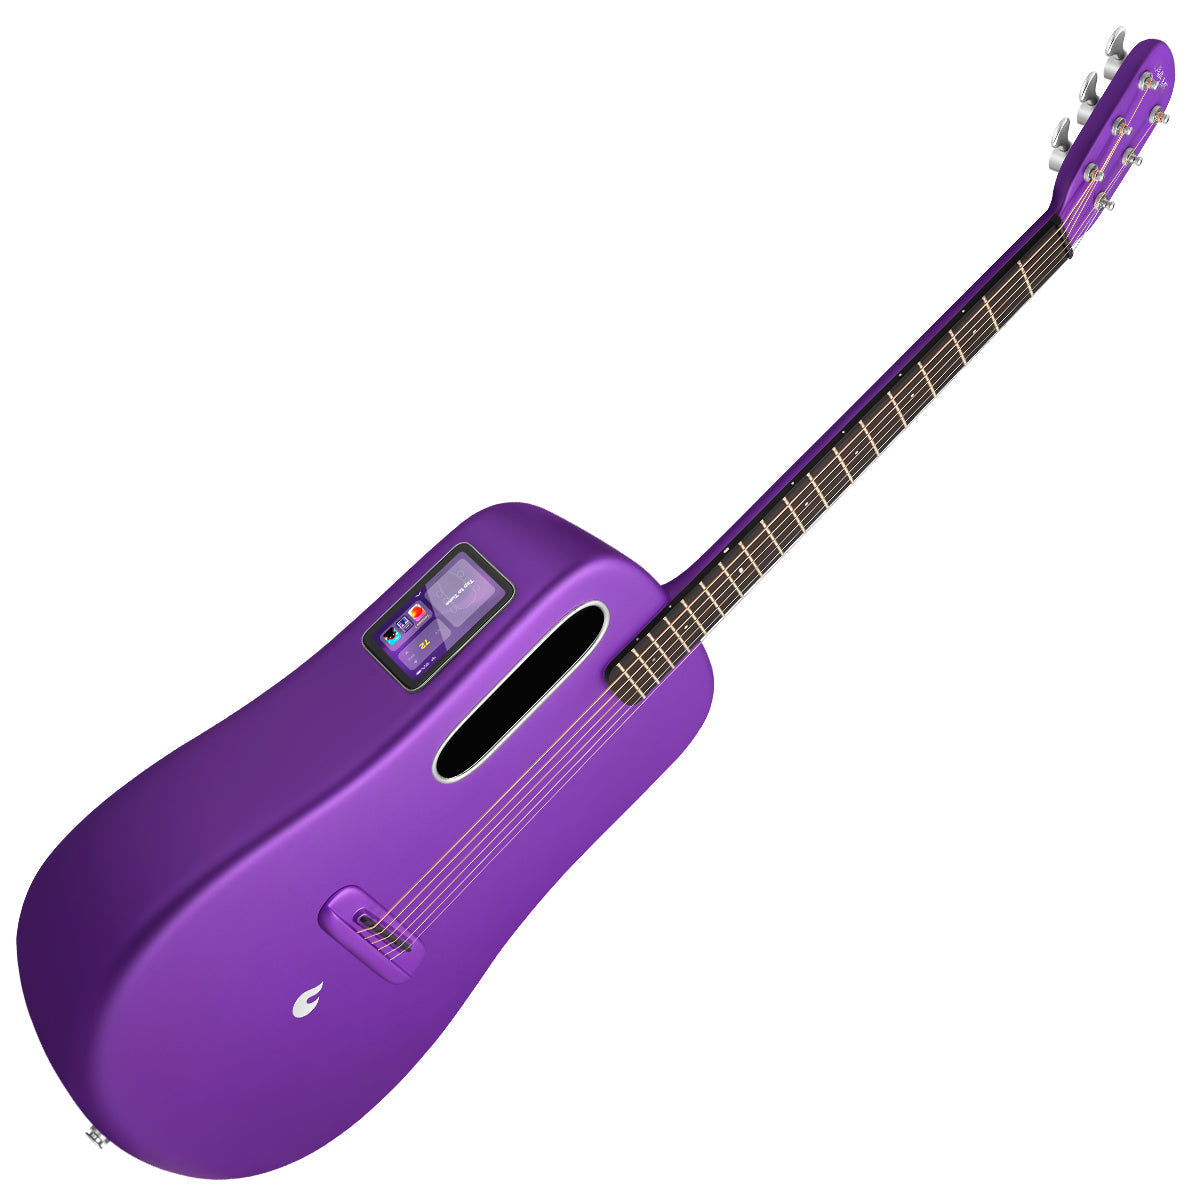 LAVA ME4 Carbon 38" with Space Bag ~ Purple, Acoustic Guitar for sale at Richards Guitars.